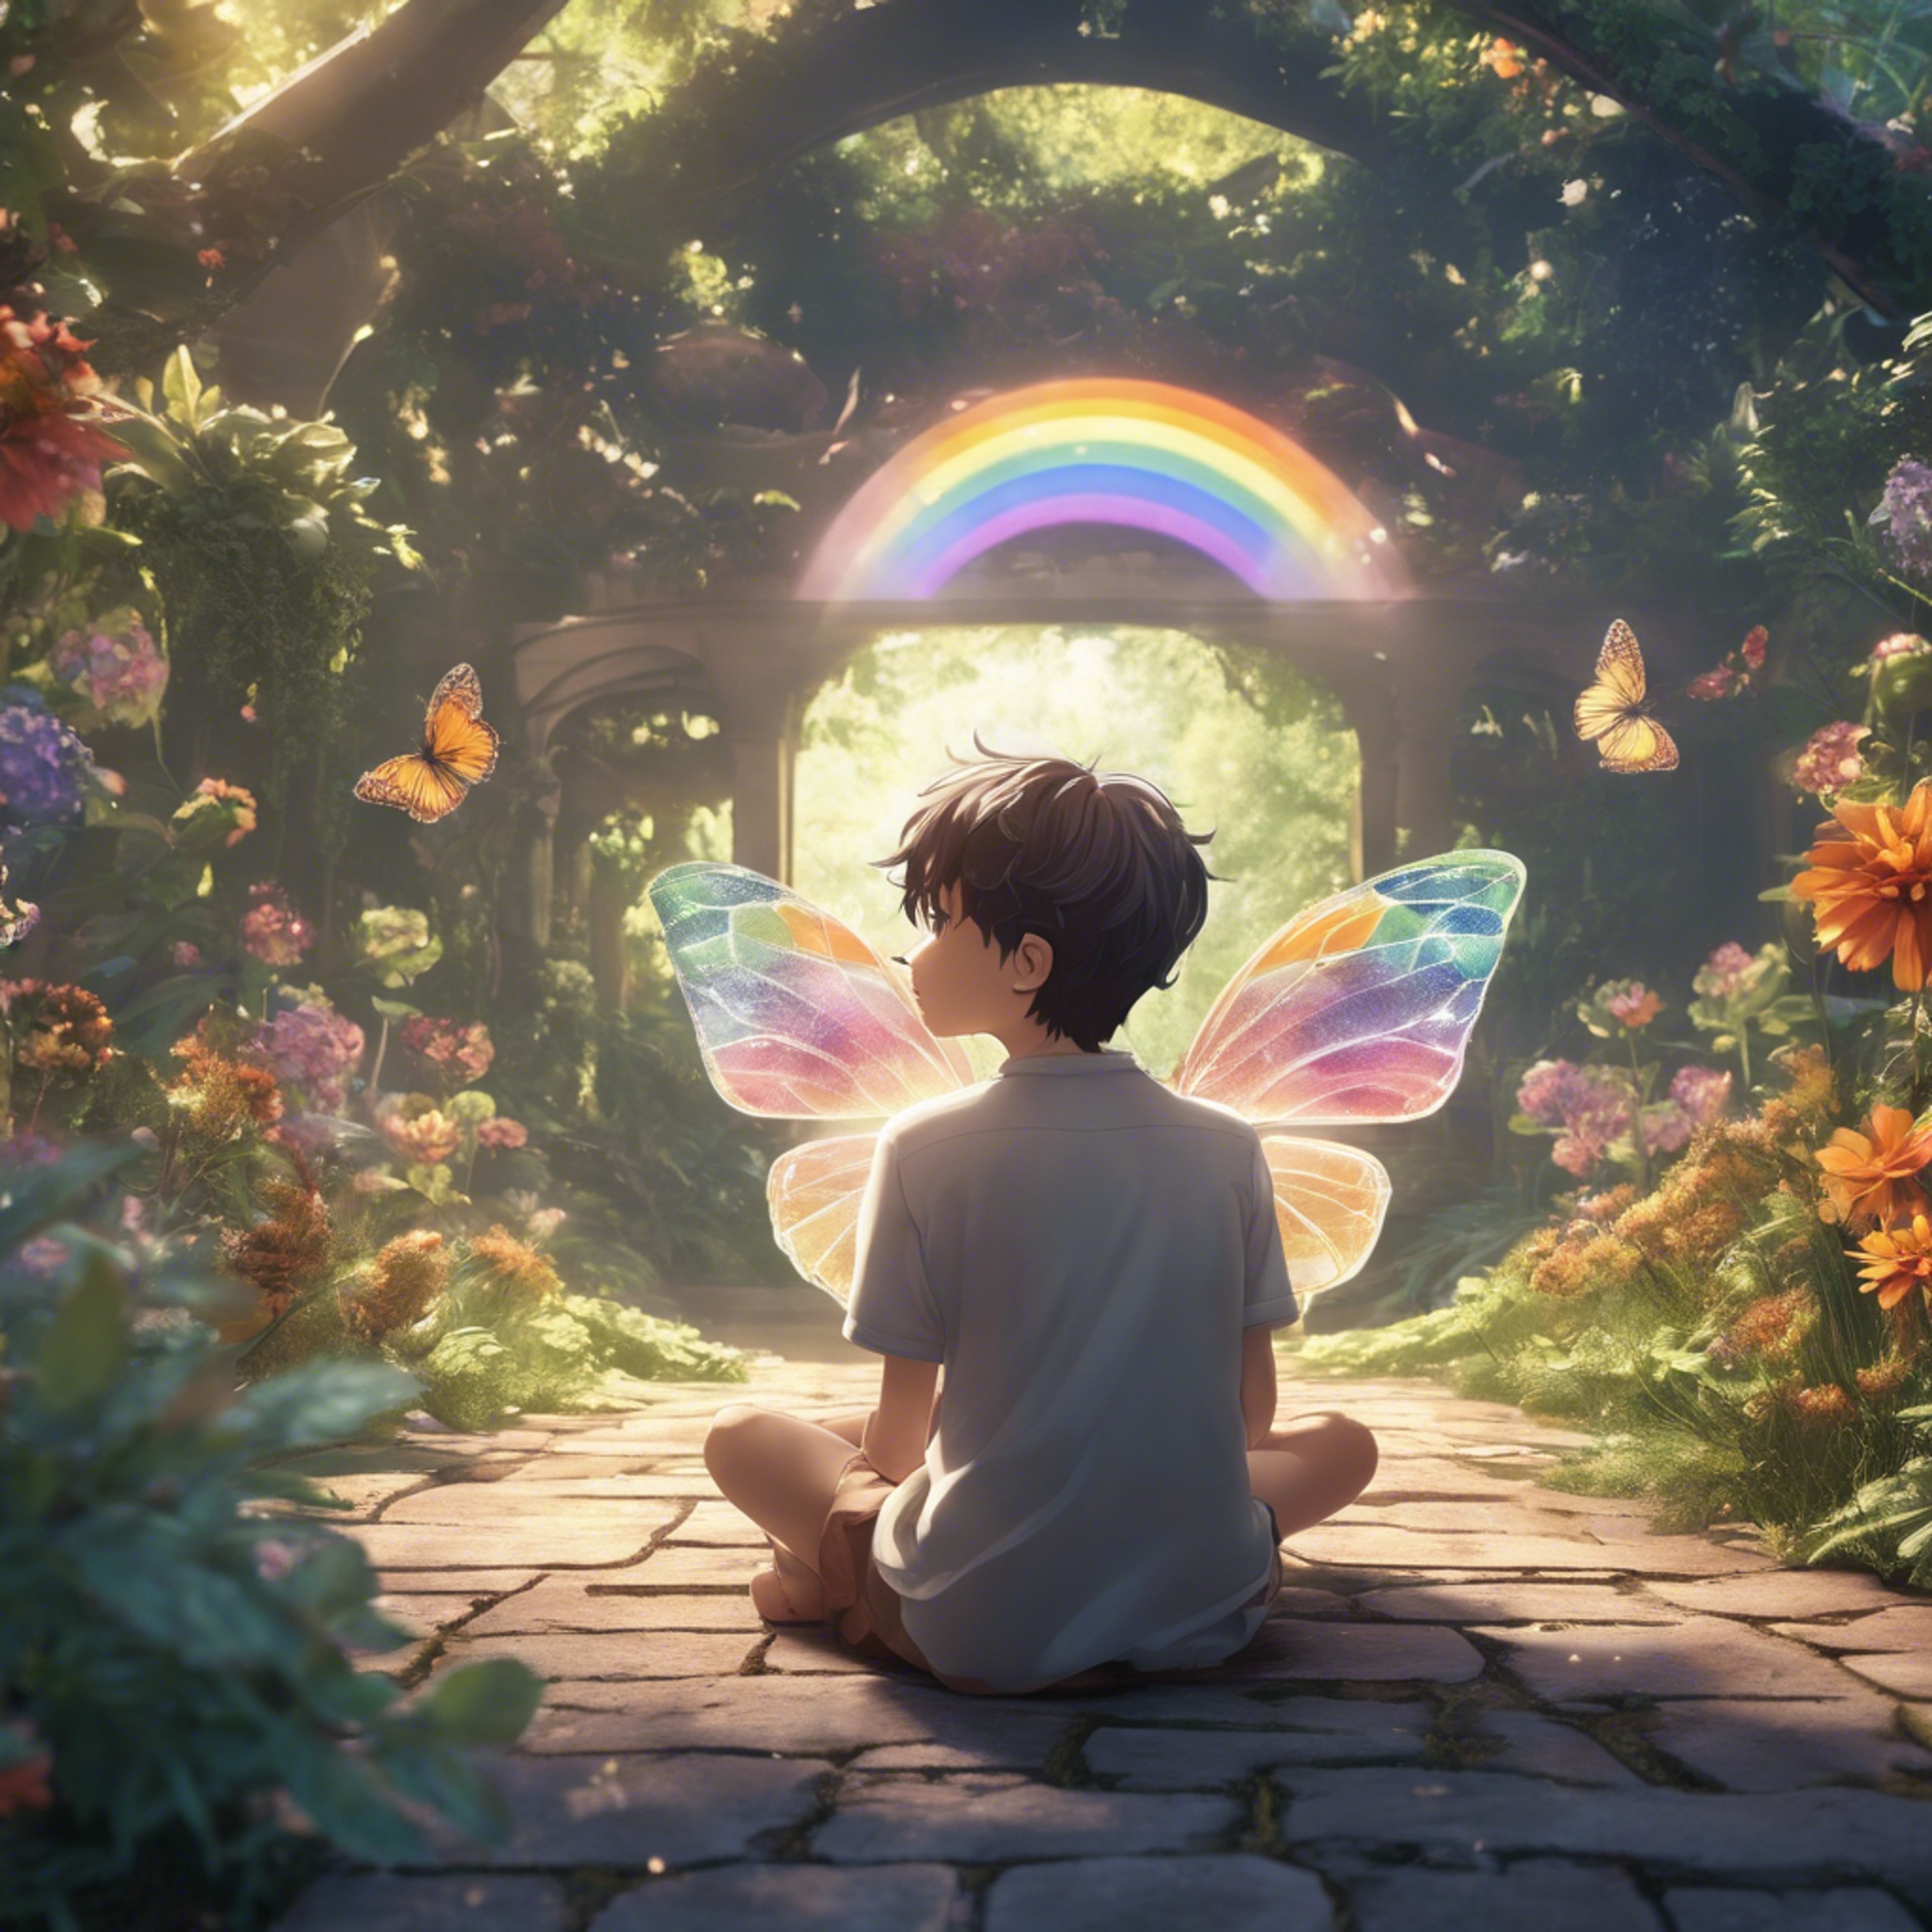 An innocent anime boy with rainbow wings gazing at a butterfly in a hidden garden. Tapeta[04bec09c0c034ff9b0e5]